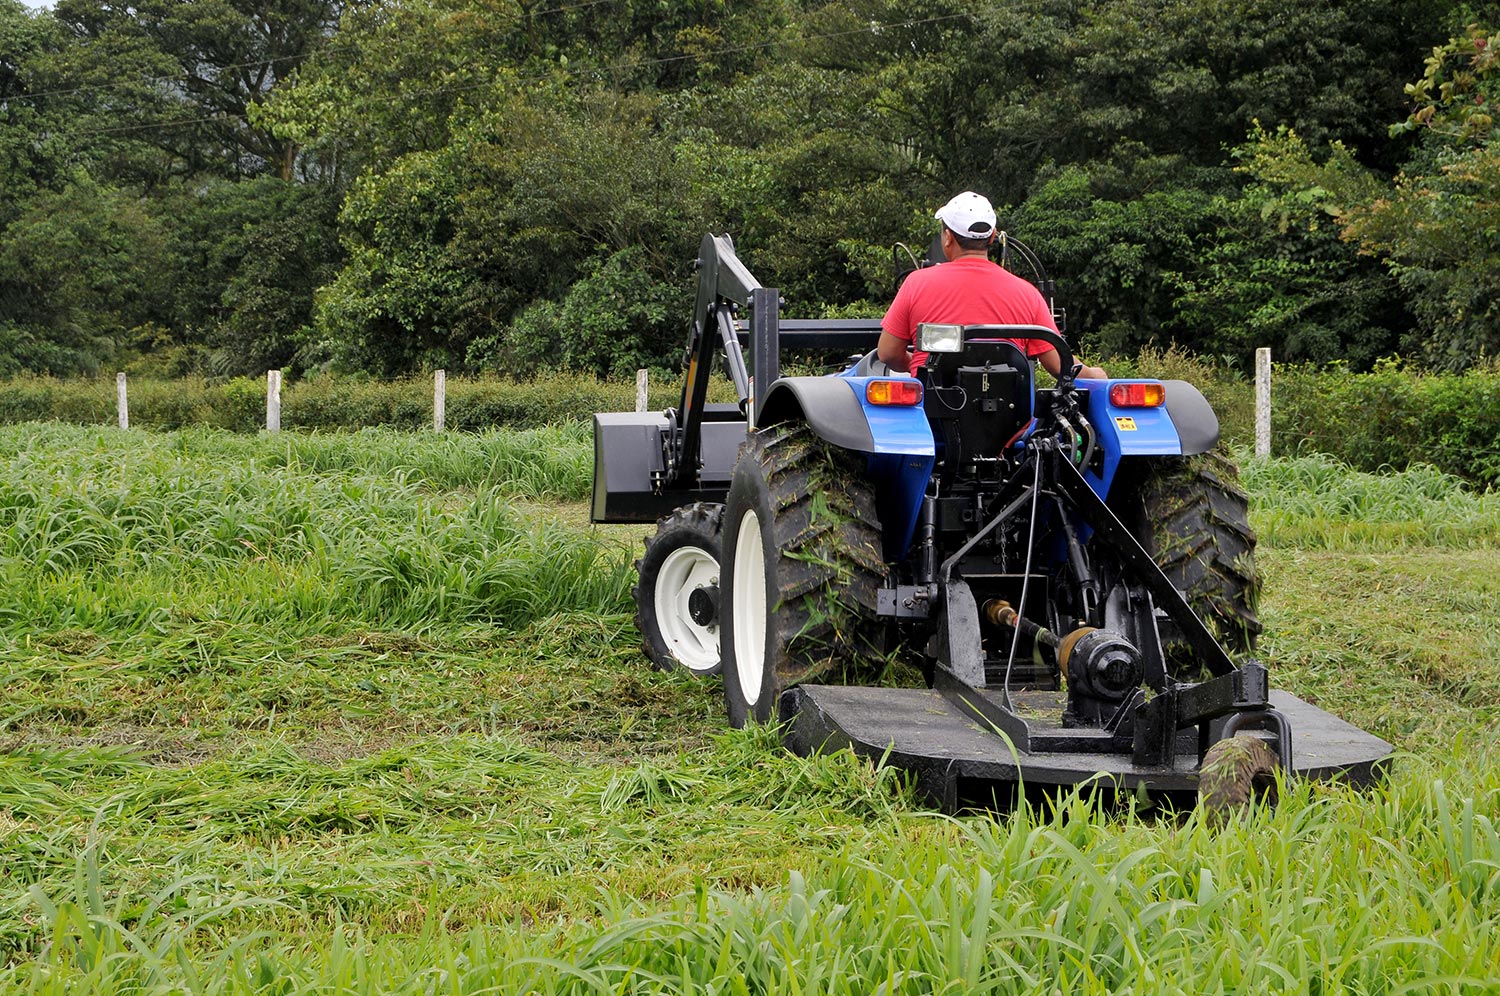 Tractor bush hogging on a grass field